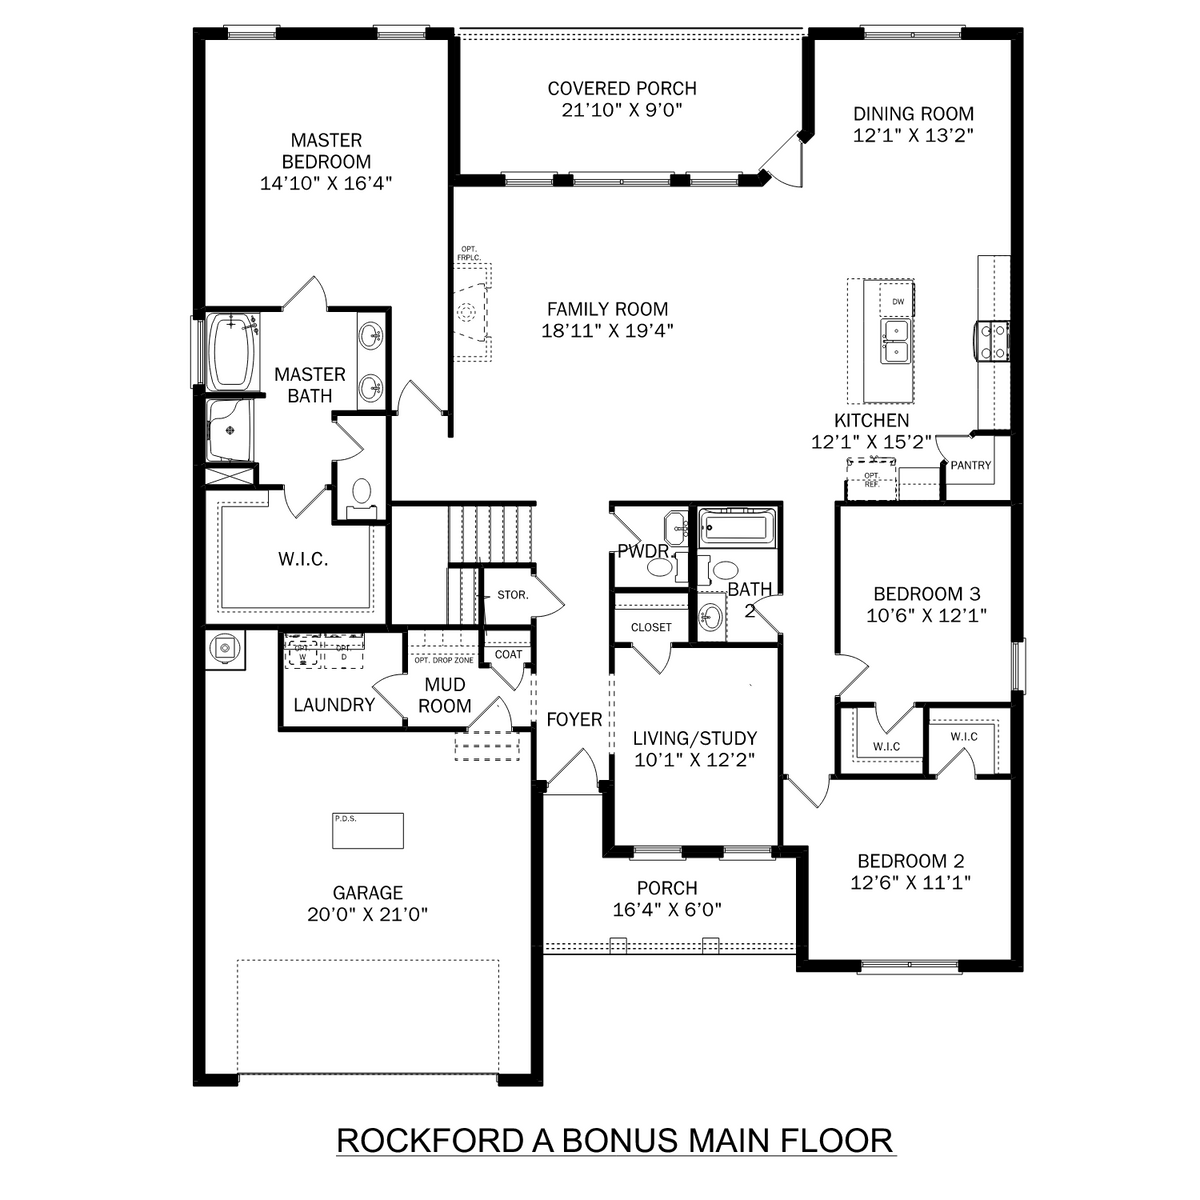 1 - The Rockford with Bonus floor plan layout for 3026 Henry Road SE in Davidson Homes' River Road Estates community.